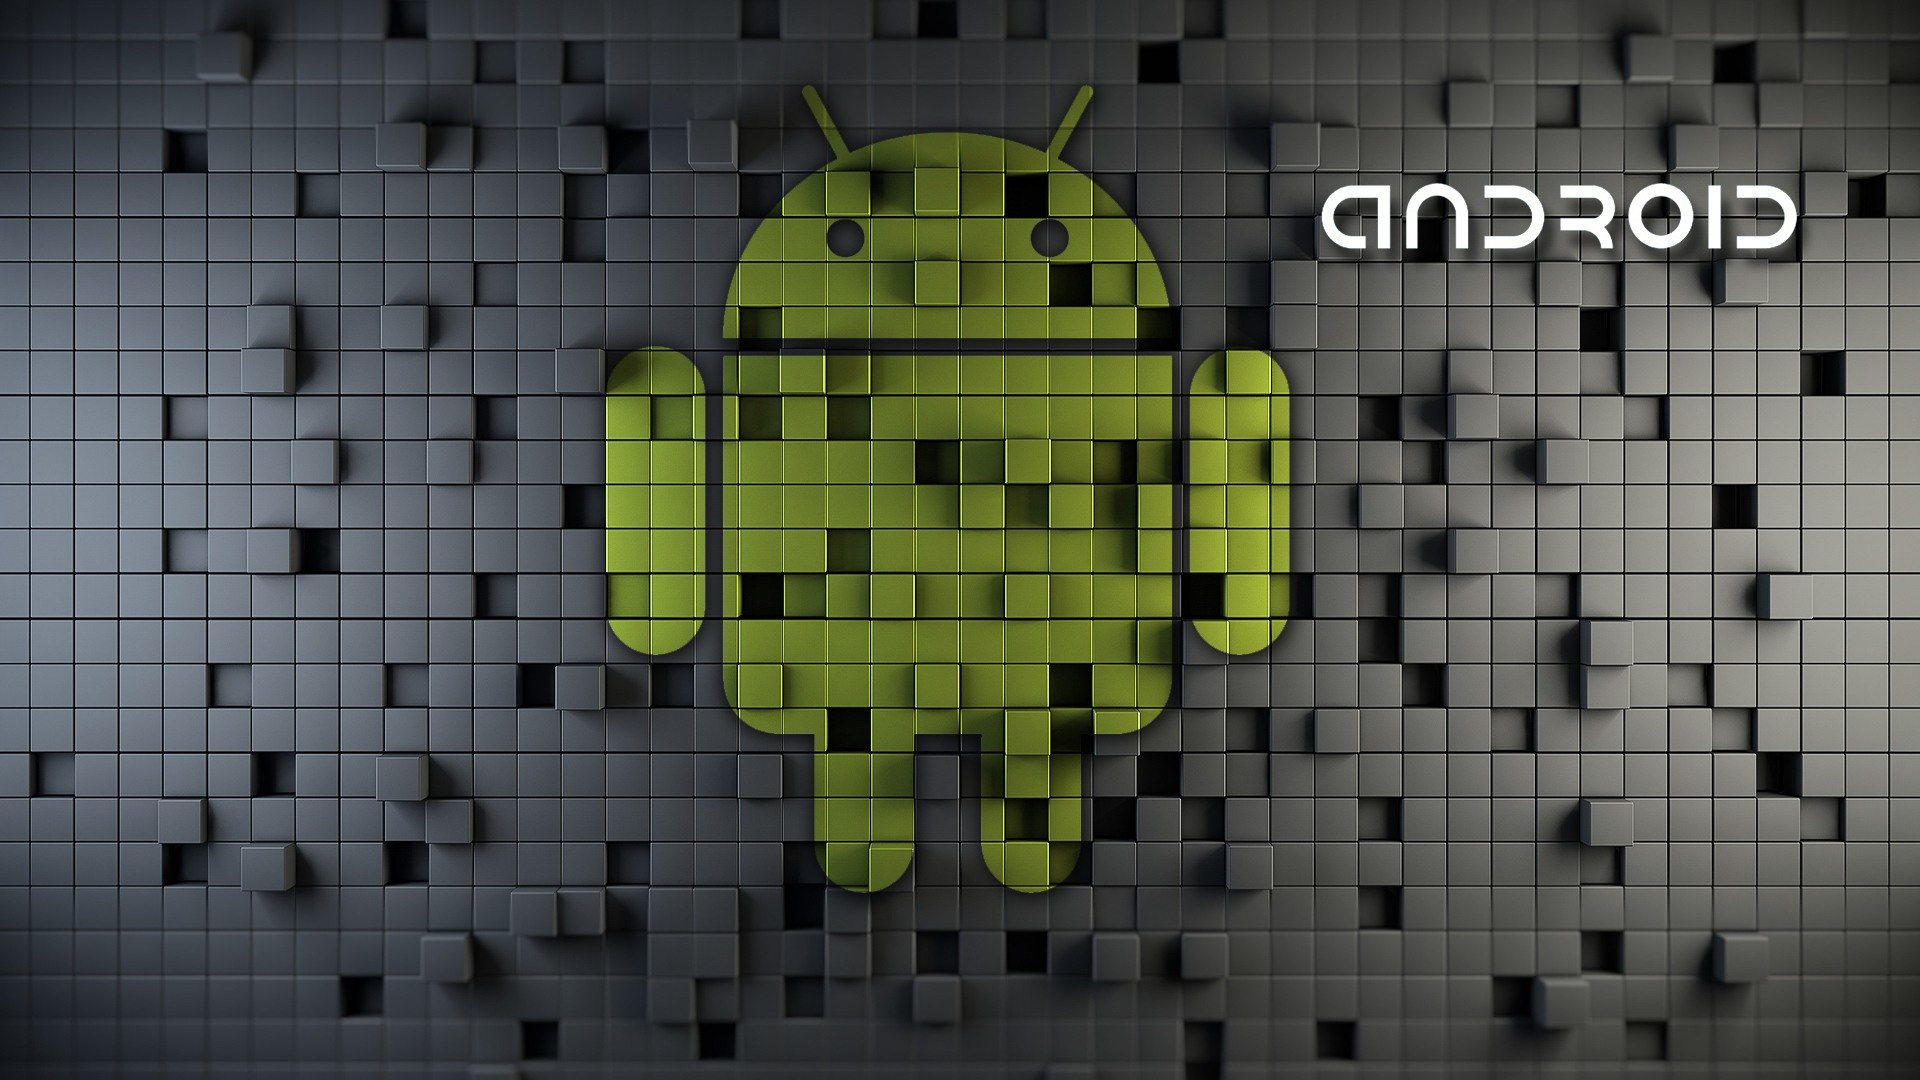 HummingBad: chiński malware zagraża 10 milionom urządzeń Android Android 3D Logo Wallpapers HD Wallpaper